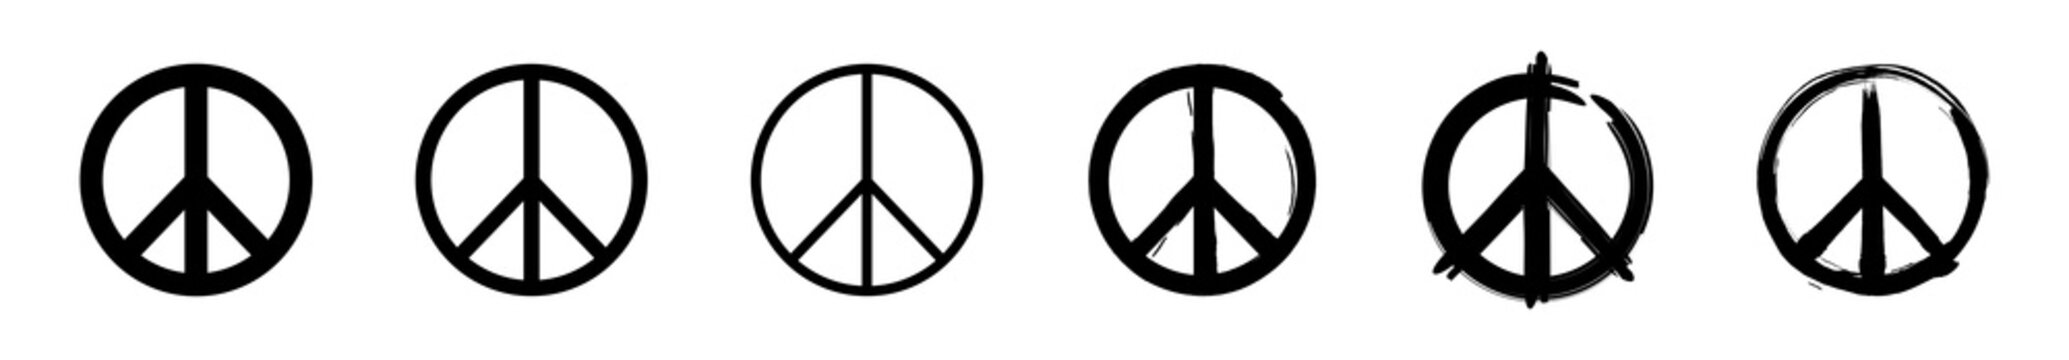 Peace Vektor Symbole, verschiedene Varianten